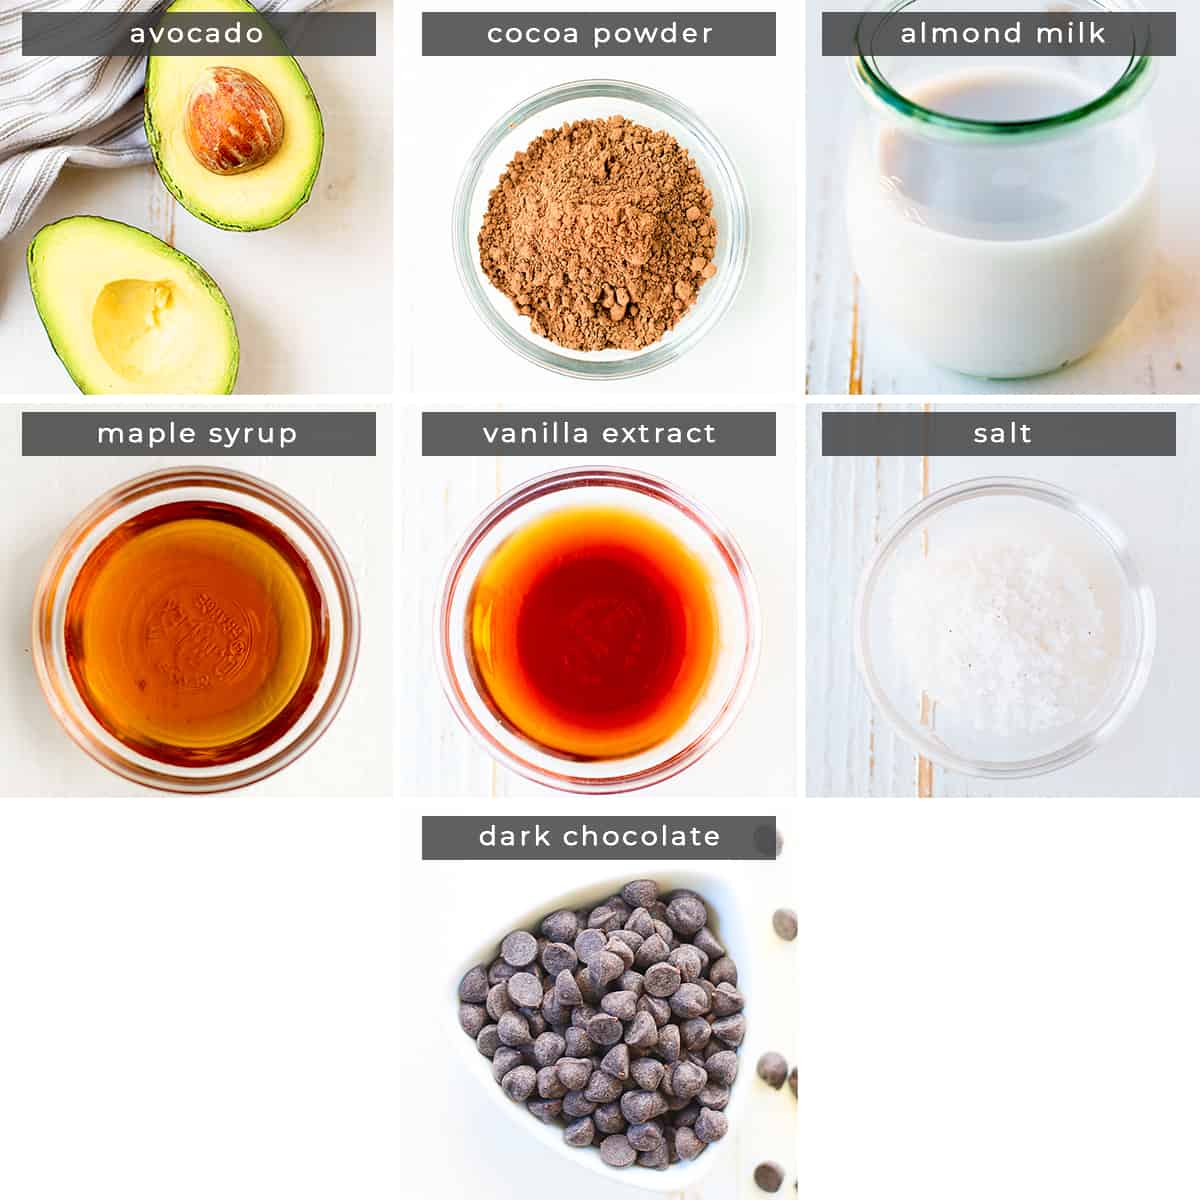 Image containing recipe ingredients: avocado, cocoa powder, almond milk, maple syrup, vanilla extract, salt, and dark chocolate.